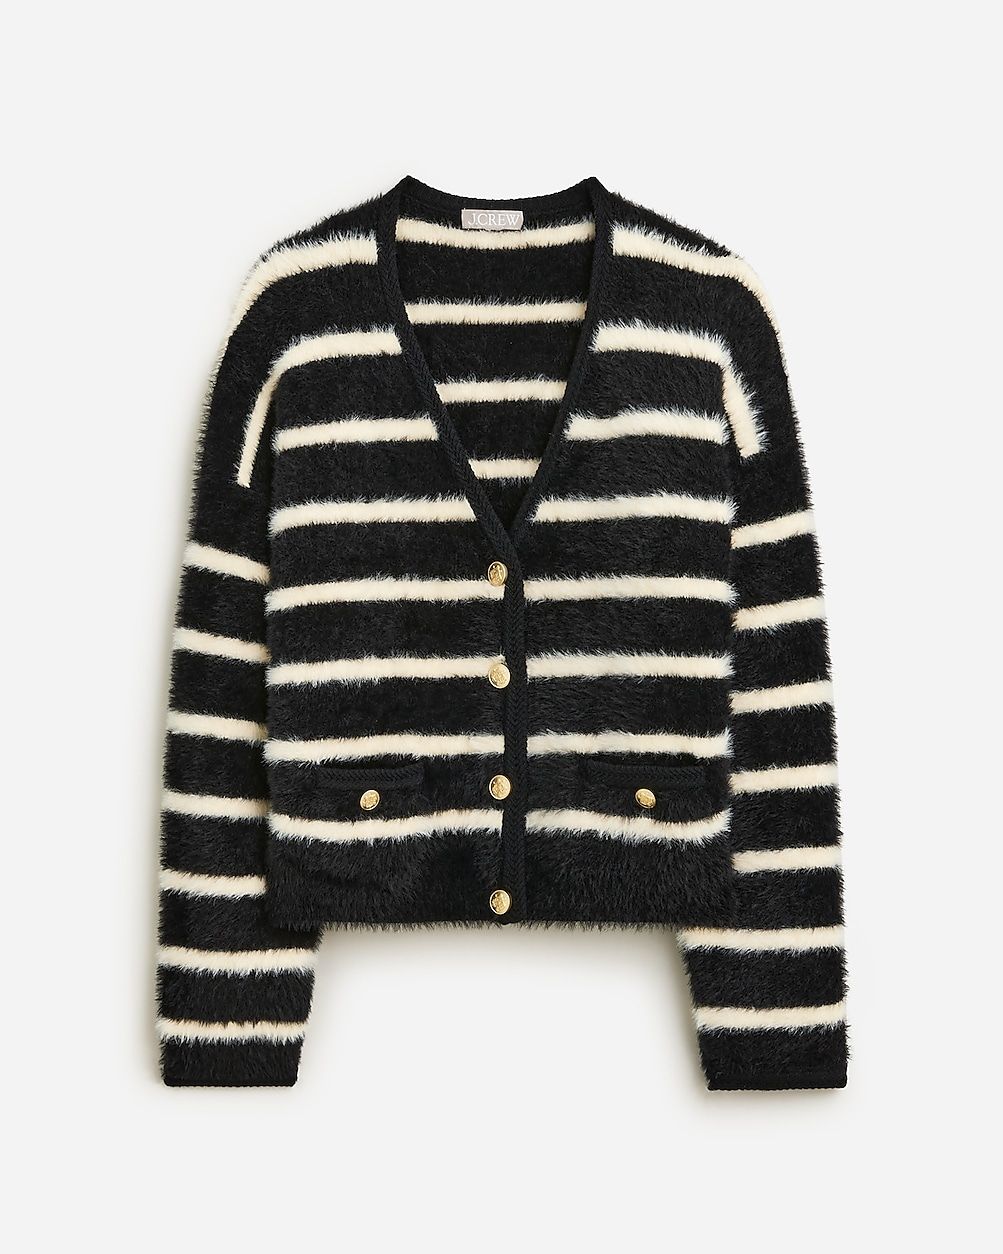 Sweater lady jacket in striped brushed yarn | J.Crew US